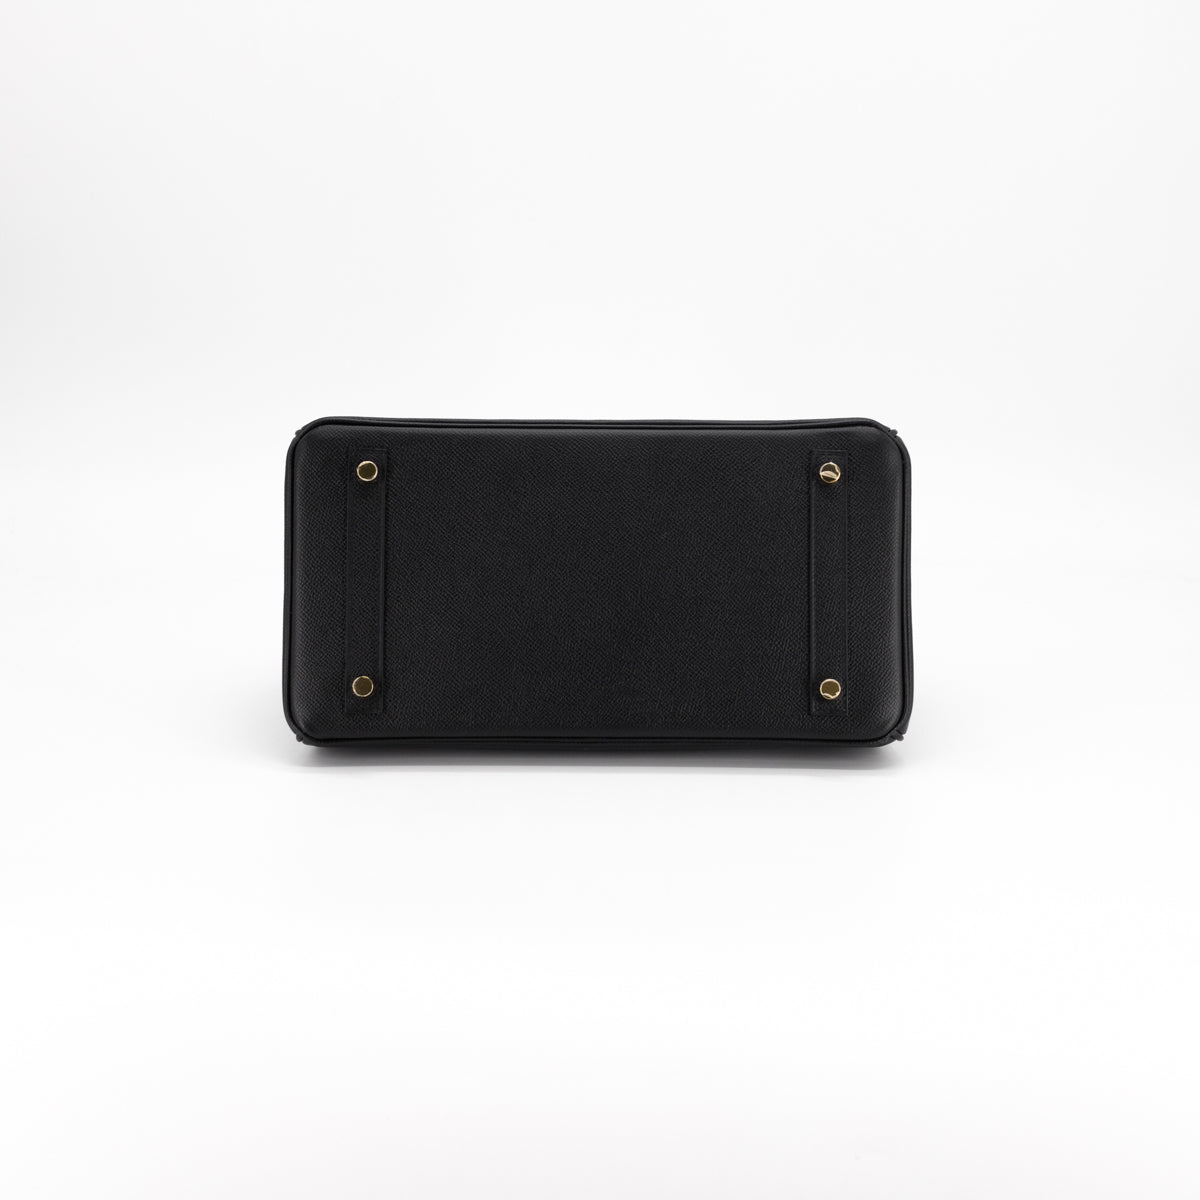 New Arrival 🖤… - Hermès Black Epsom Leather Birkin 30 With Gold